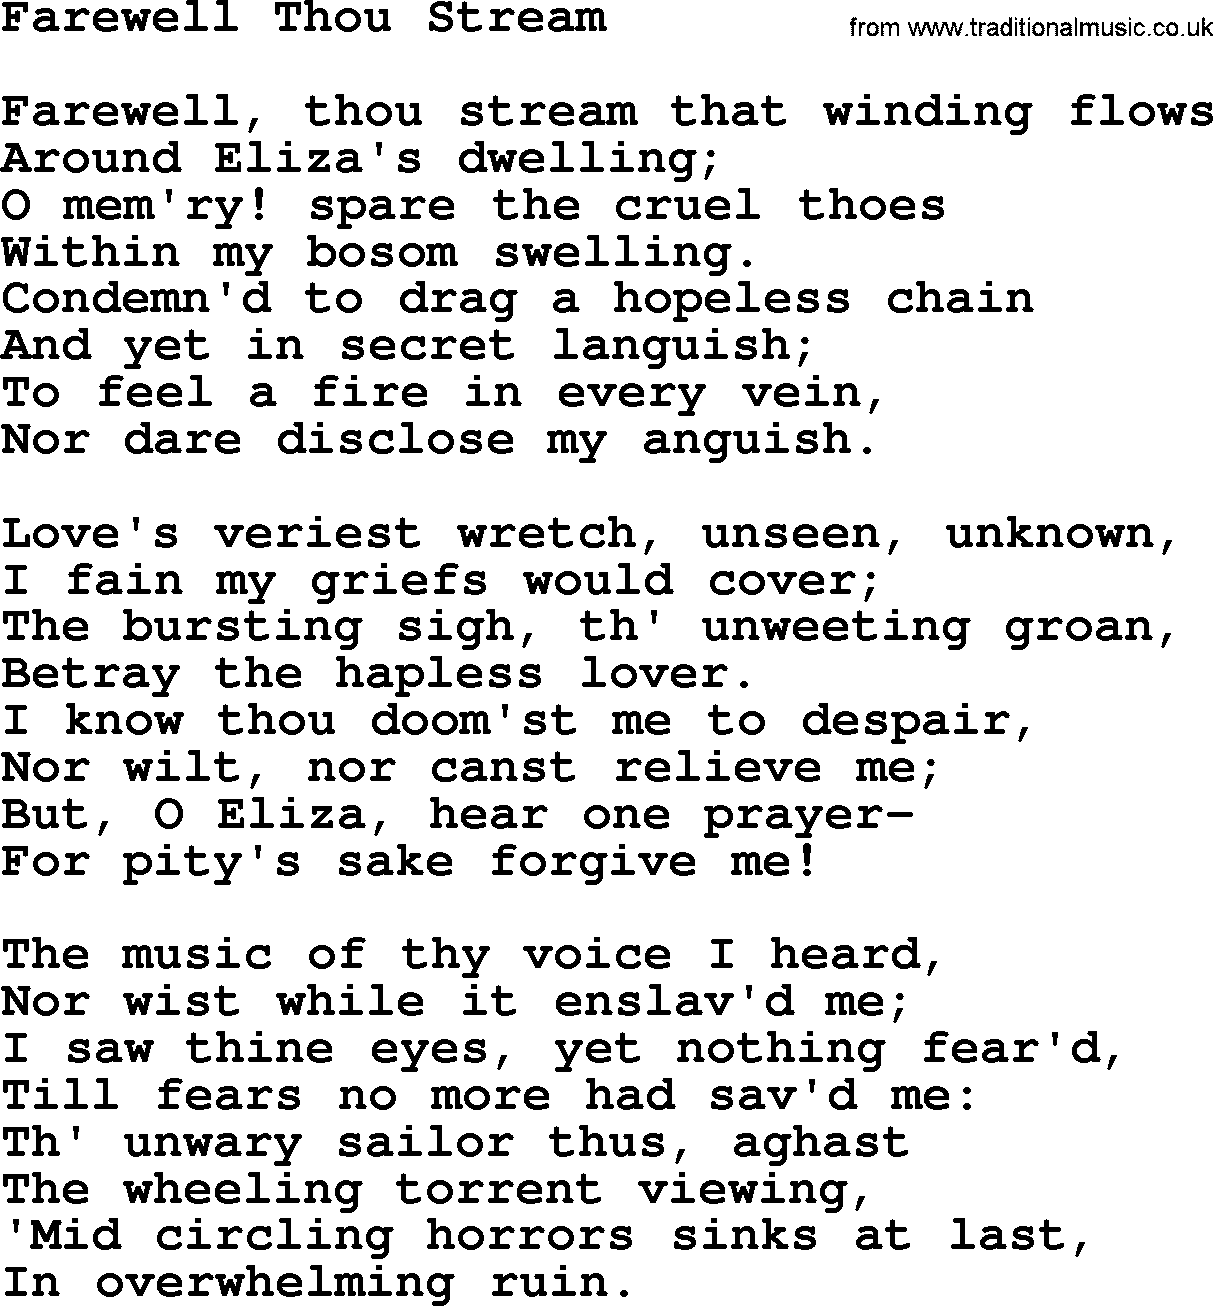 Robert Burns Songs & Lyrics: Farewell Thou Stream